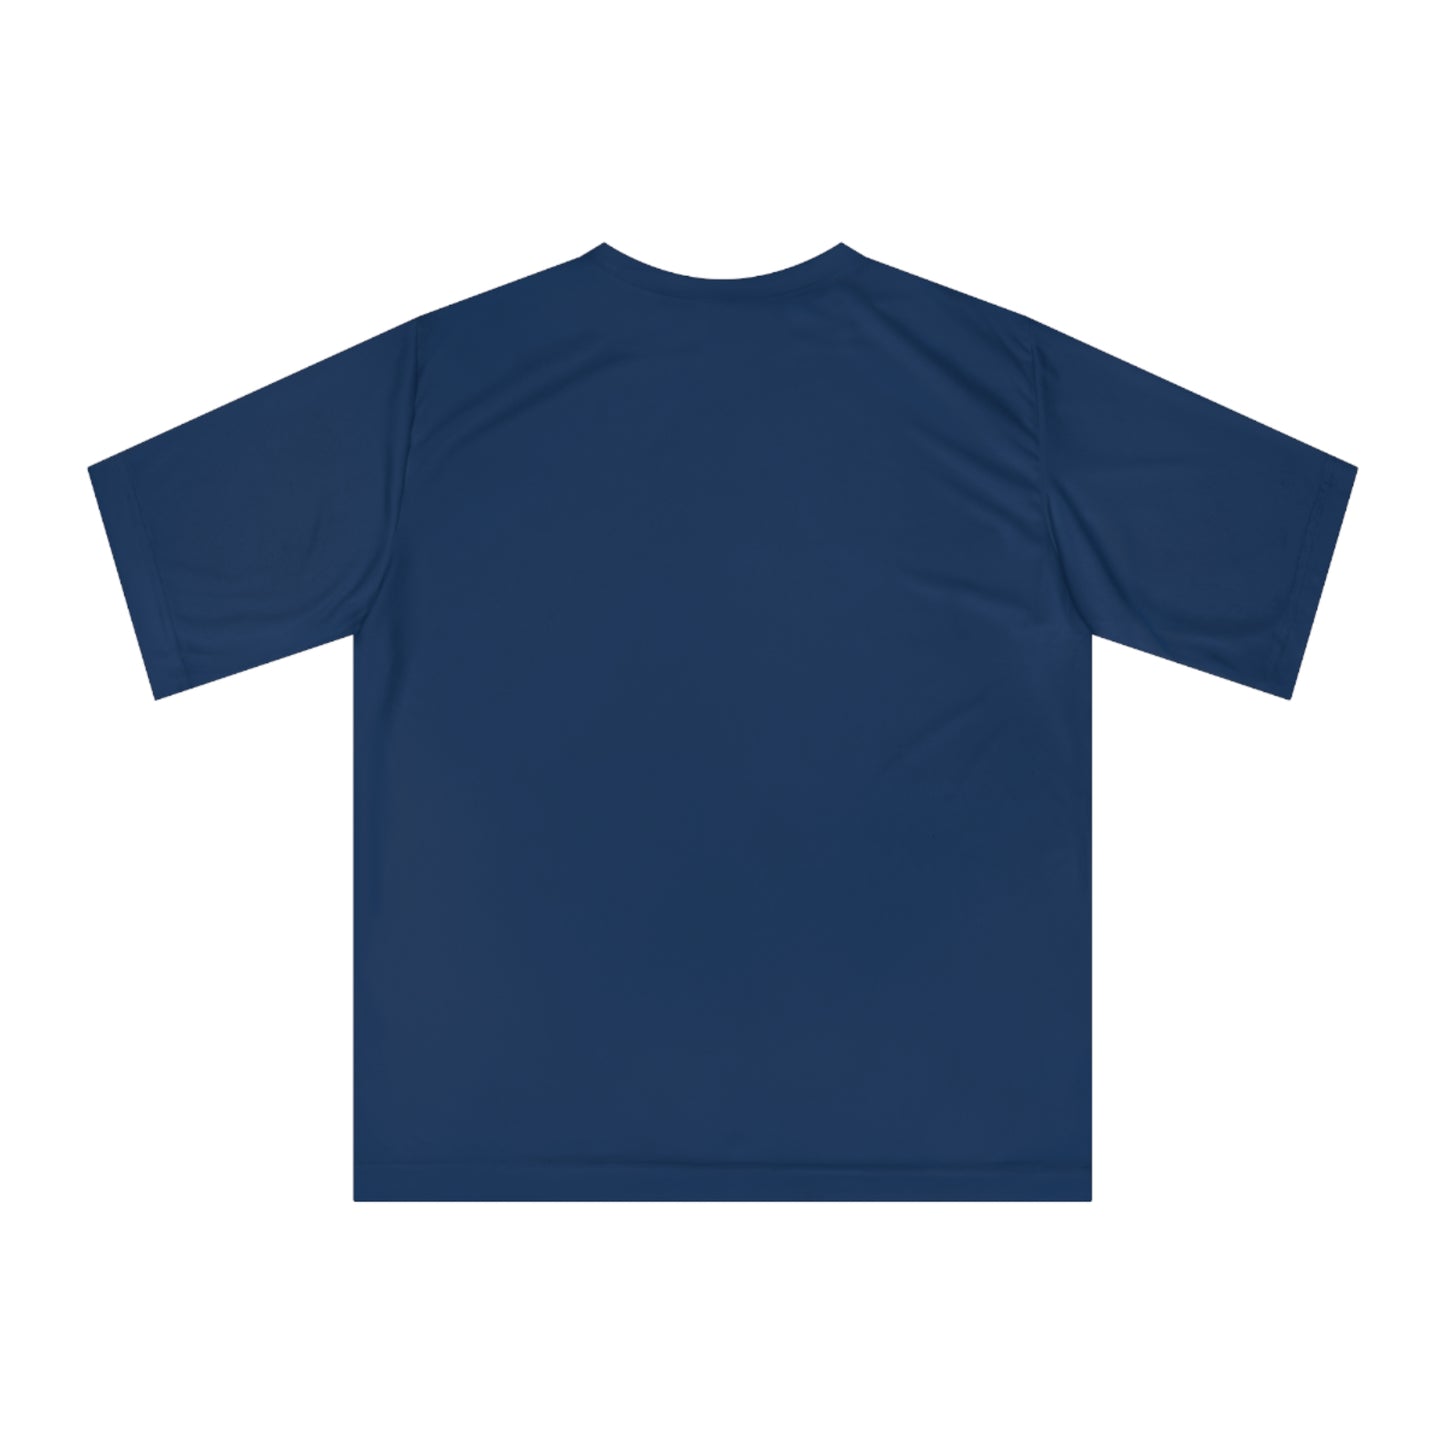 Baseball Rockets - Unisex Zone Performance T-shirt